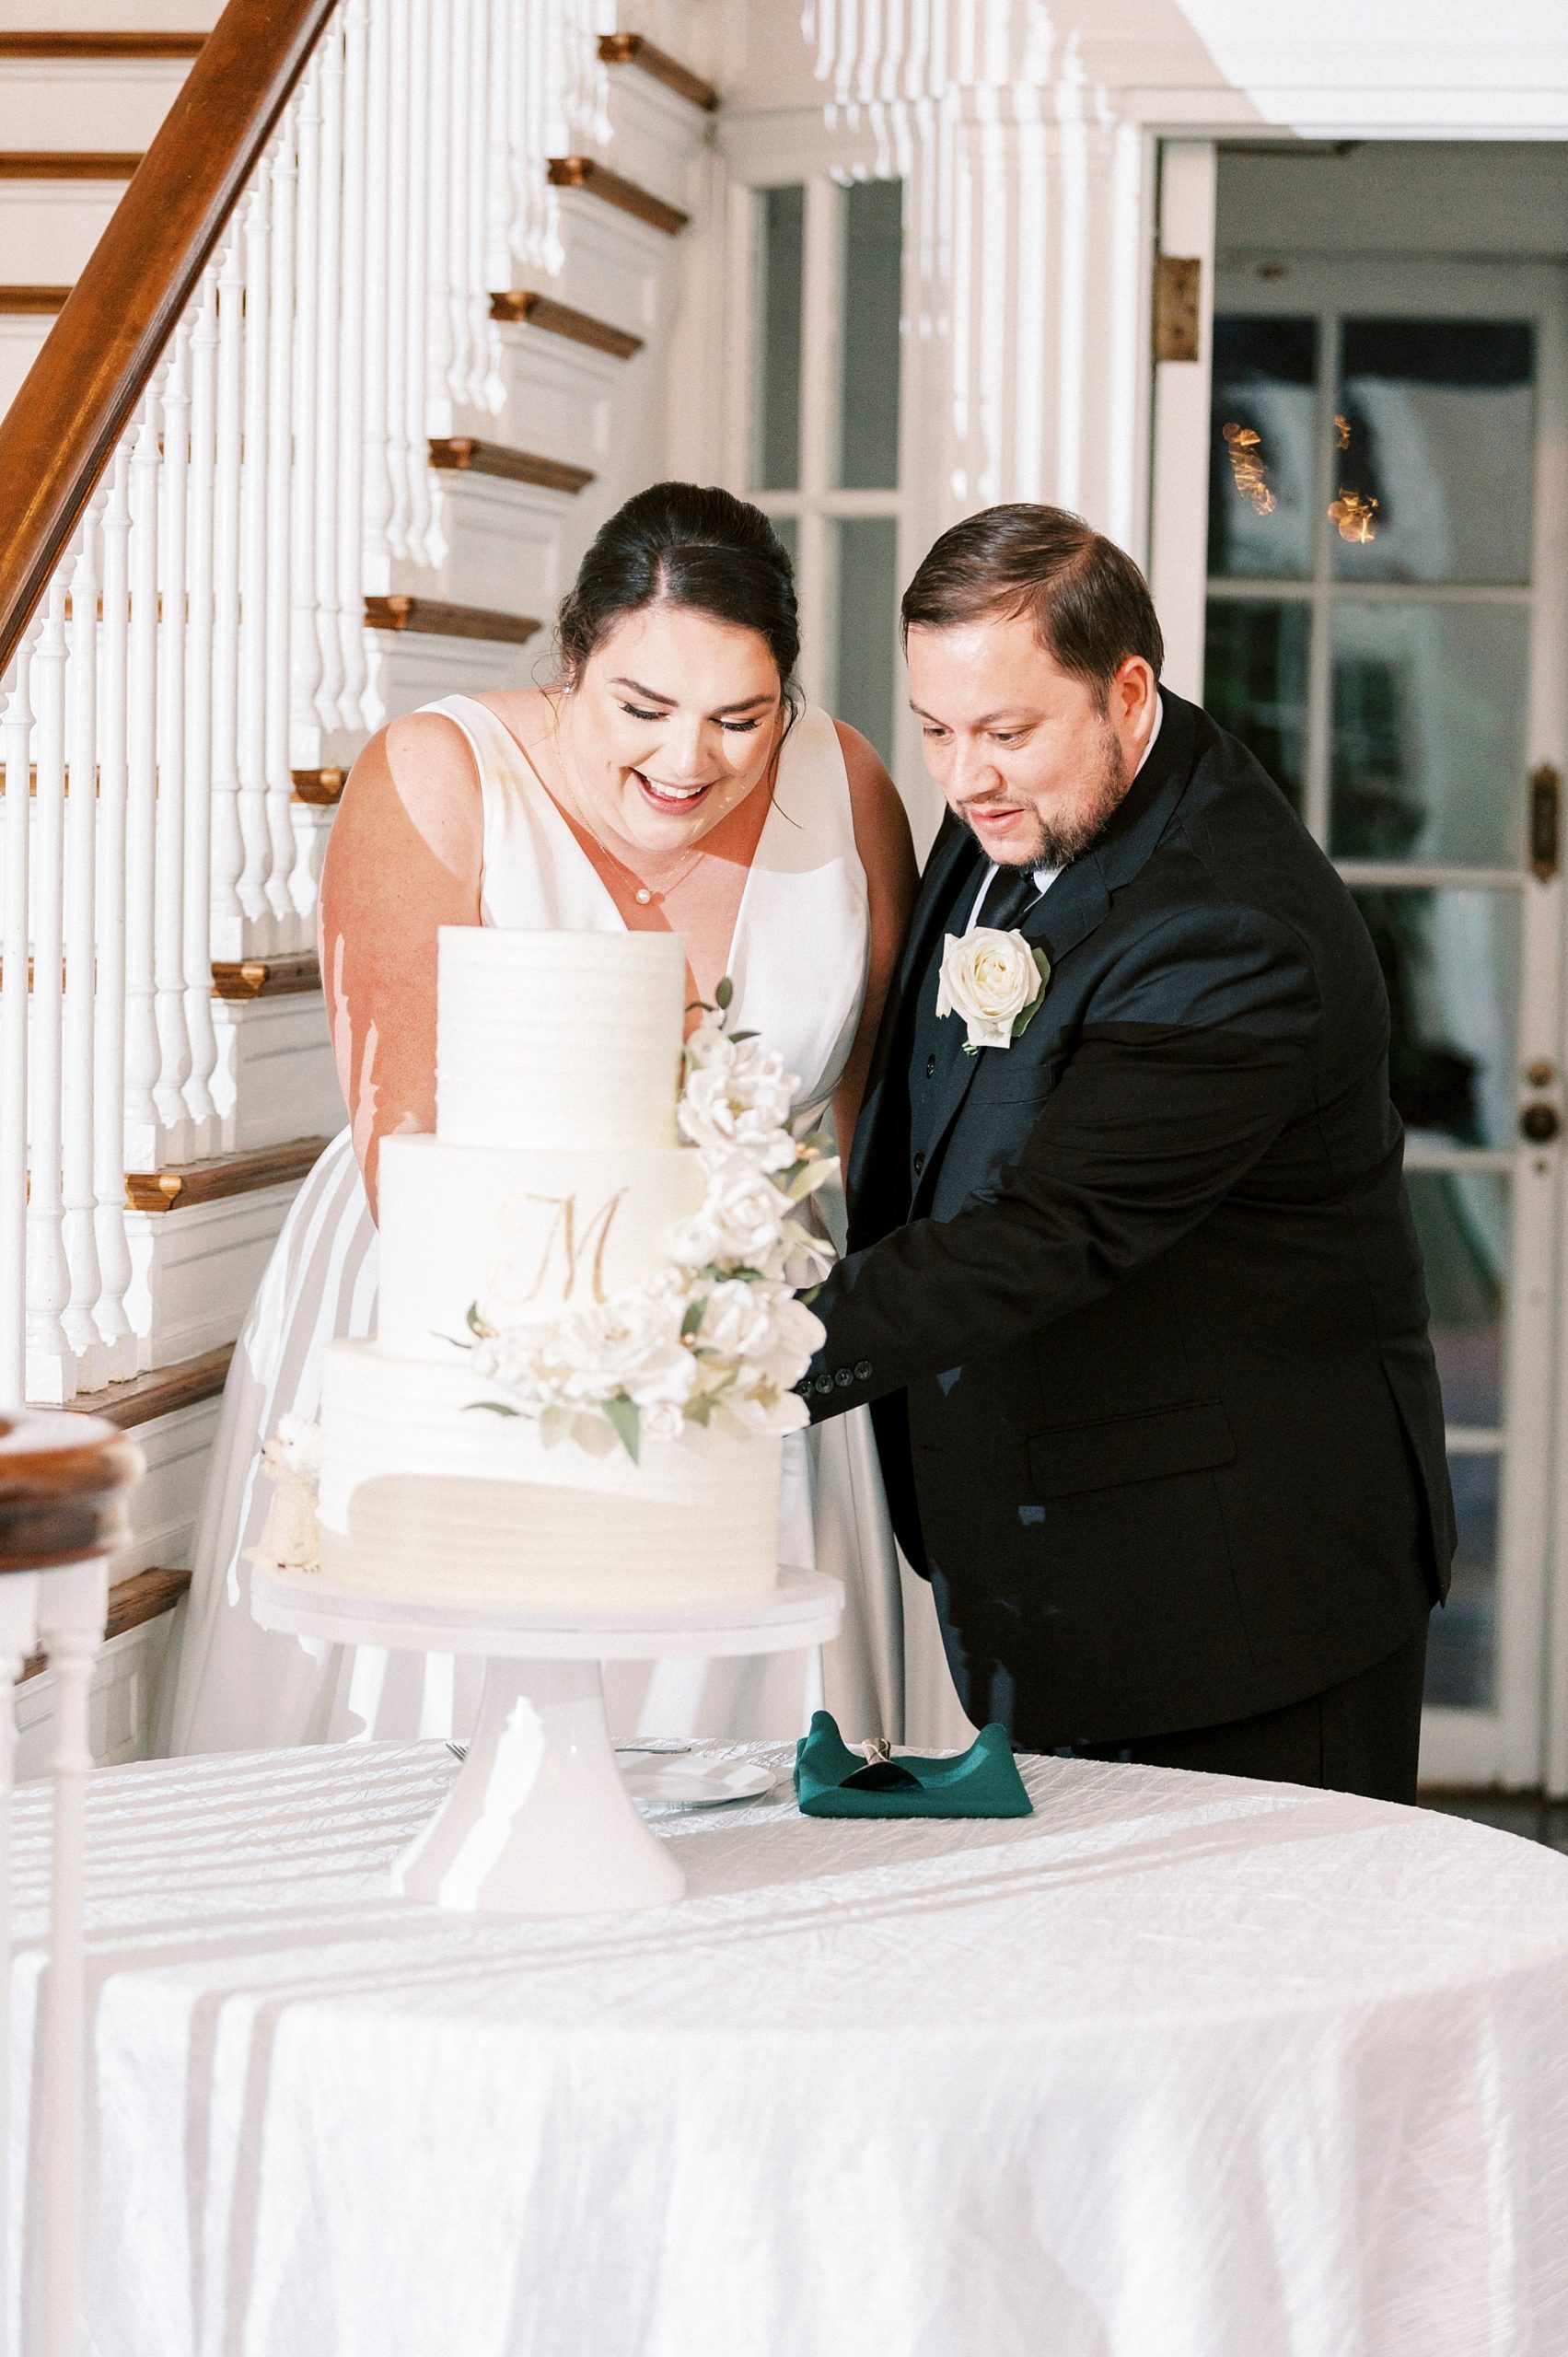 bride and groom cut wedding cake during spring Separk Mansion wedding reception